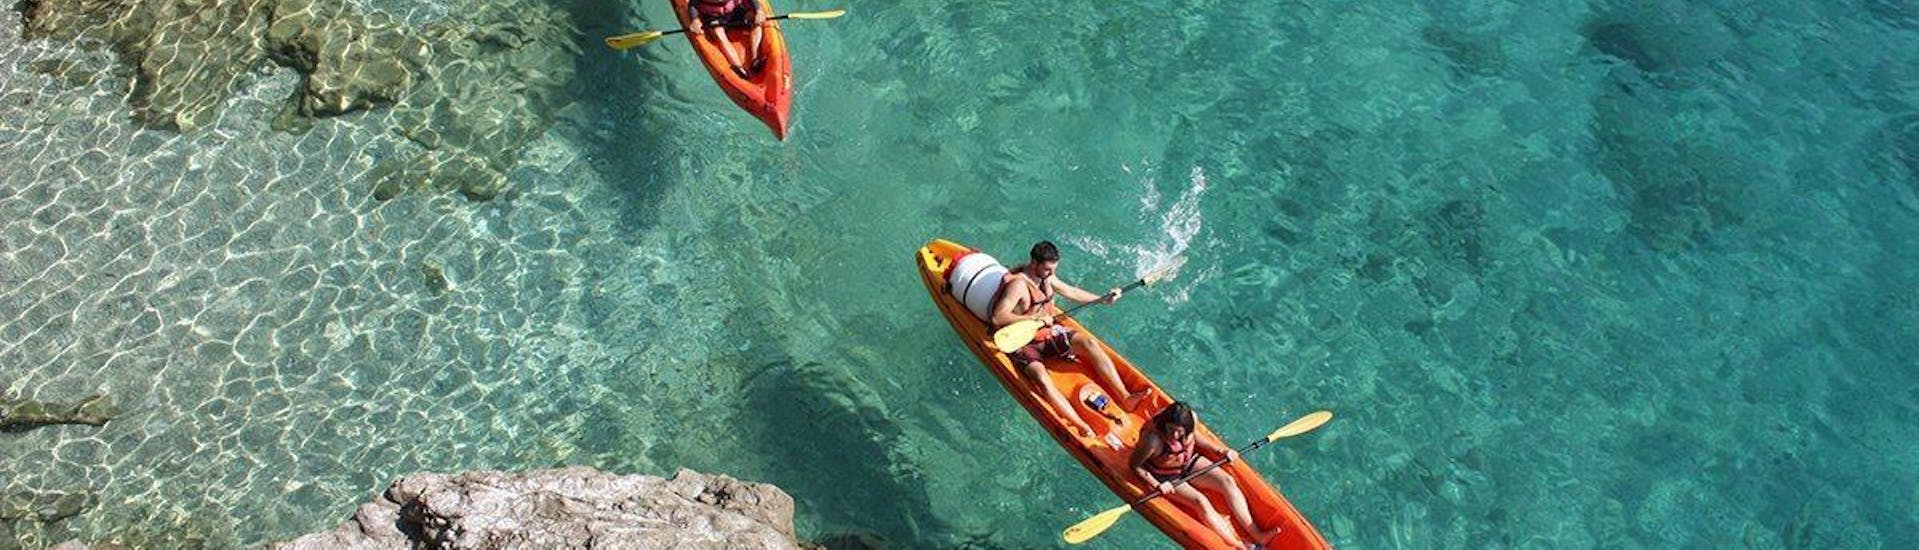 Tourists are paddling along spectacular coastal rocks during a sea kayaking tour in Dalmatia organised by Adventure Dalmatia.